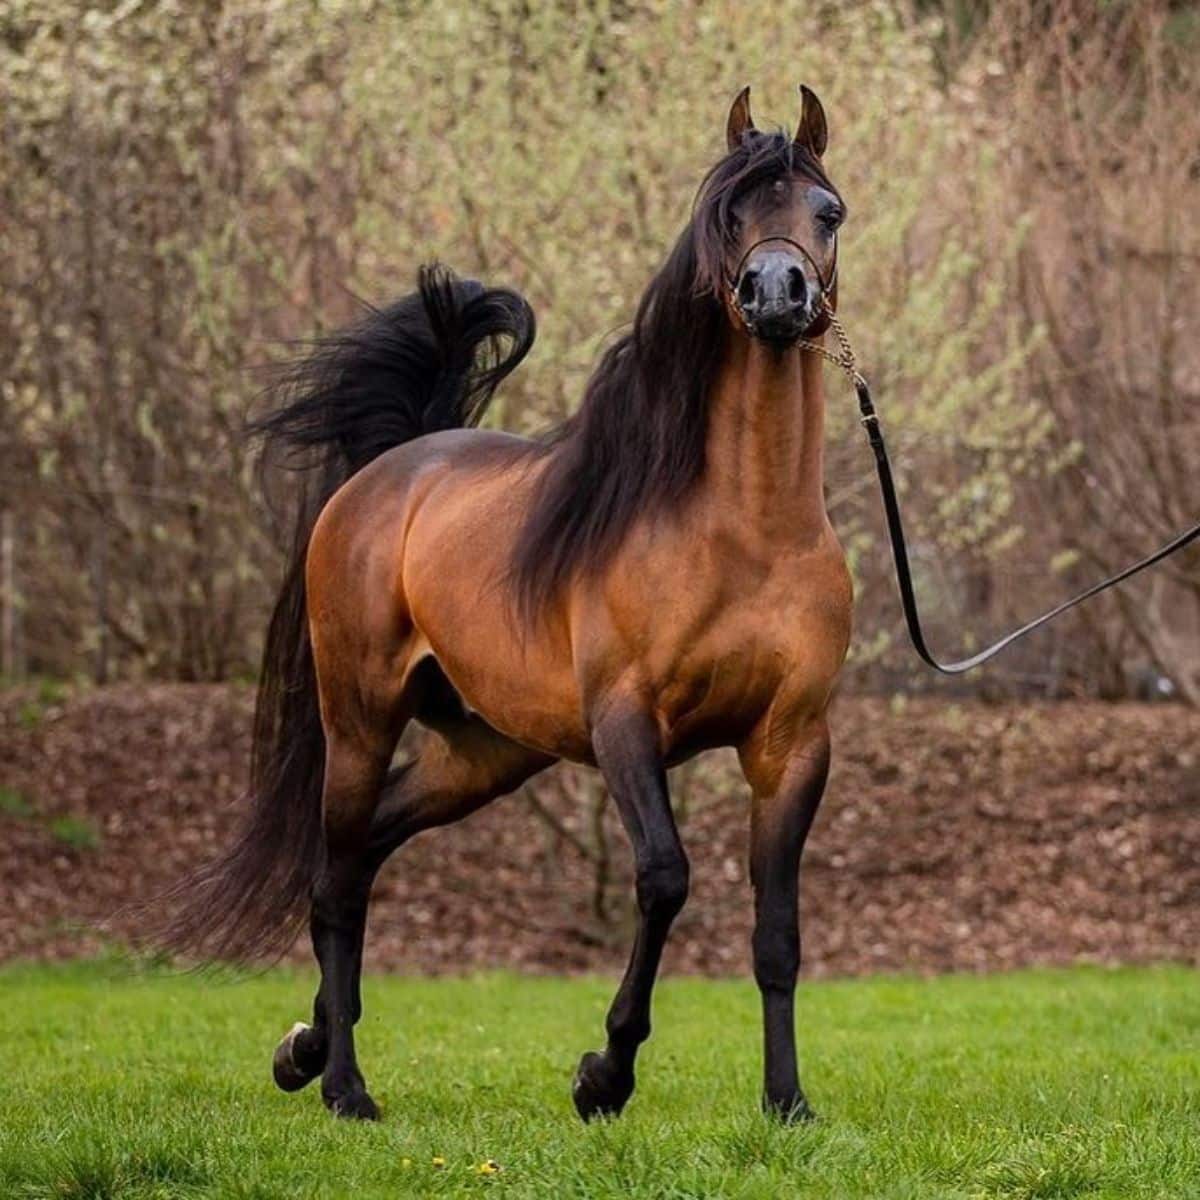 An elegant brown Arabian Horse walks on a green lawn.